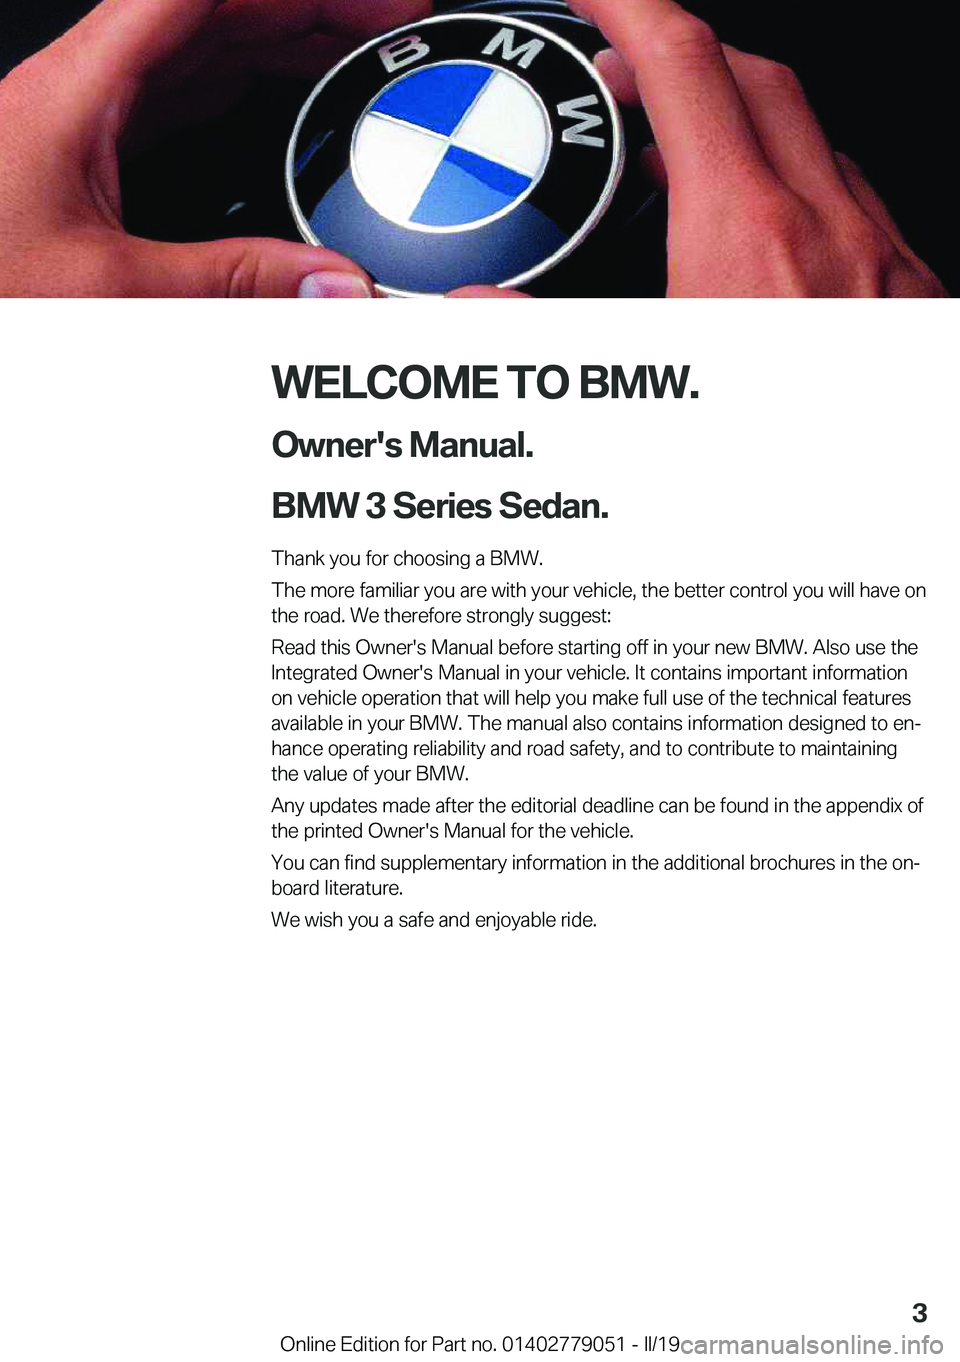 BMW 3 SERIES 2019  Owners Manual �W�E�L�C�O�M�E��T�O��B�M�W�.�O�w�n�e�r�'�s��M�a�n�u�a�l�.
�B�M�W��3��S�e�r�i�e�s��S�e�d�a�n�.
�T�h�a�n�k��y�o�u��f�o�r��c�h�o�o�s�i�n�g��a��B�M�W�.
�T�h�e��m�o�r�e��f�a�m�i�l�i�a�r��